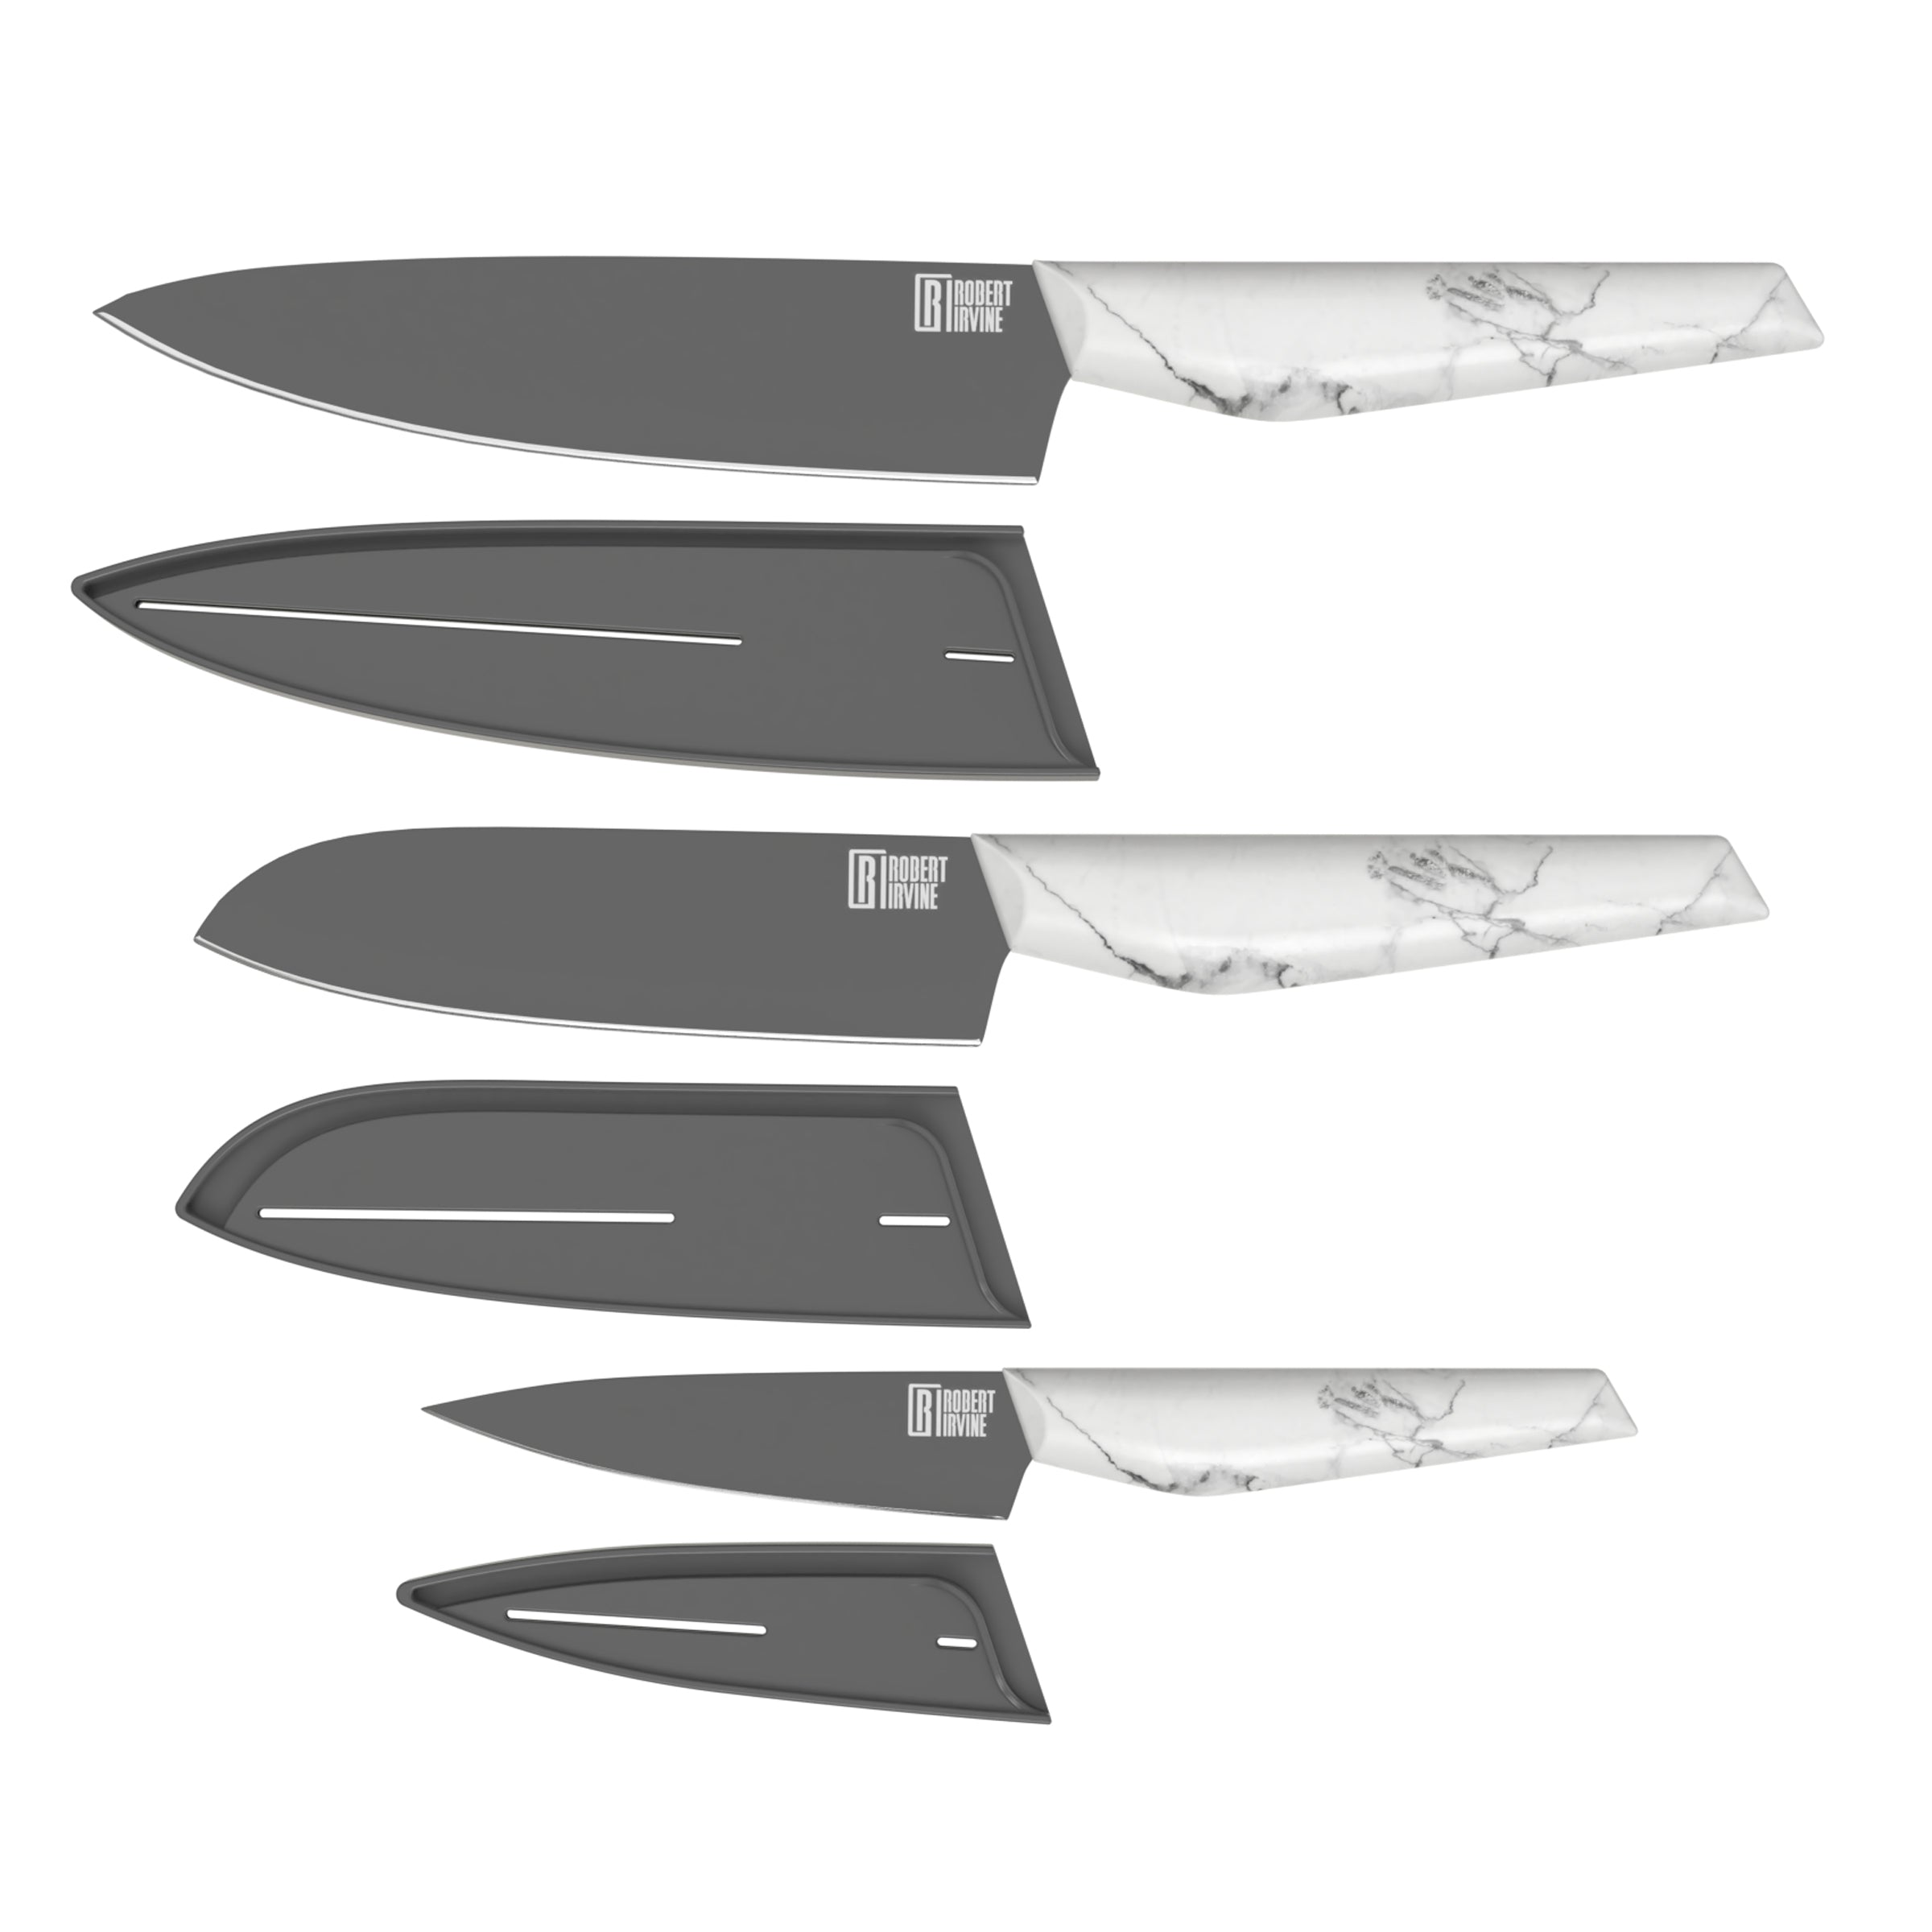 Robert Irvine 10-Piece Hollow Handle Knife Block Set - Black